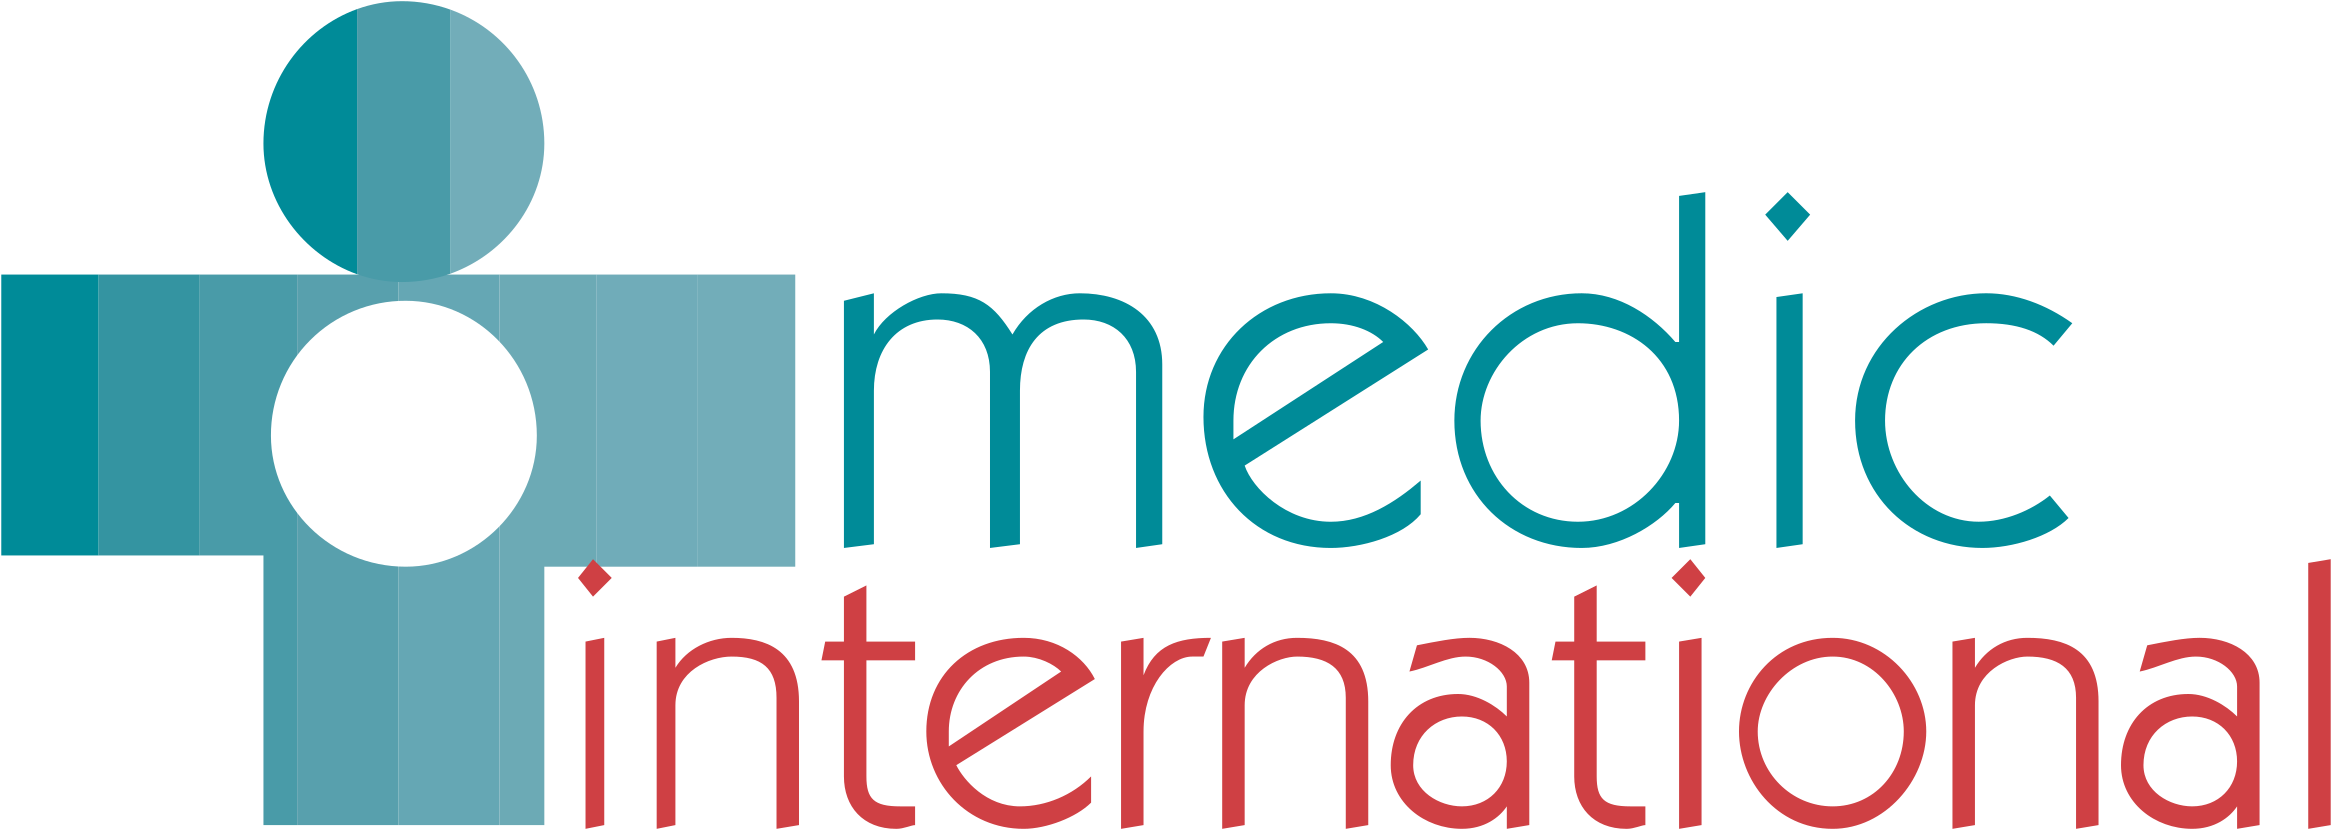 Medium int. Medic logo. Веб -Медикал логотип. Медик Интернешнл лого. Sur medic логотип.